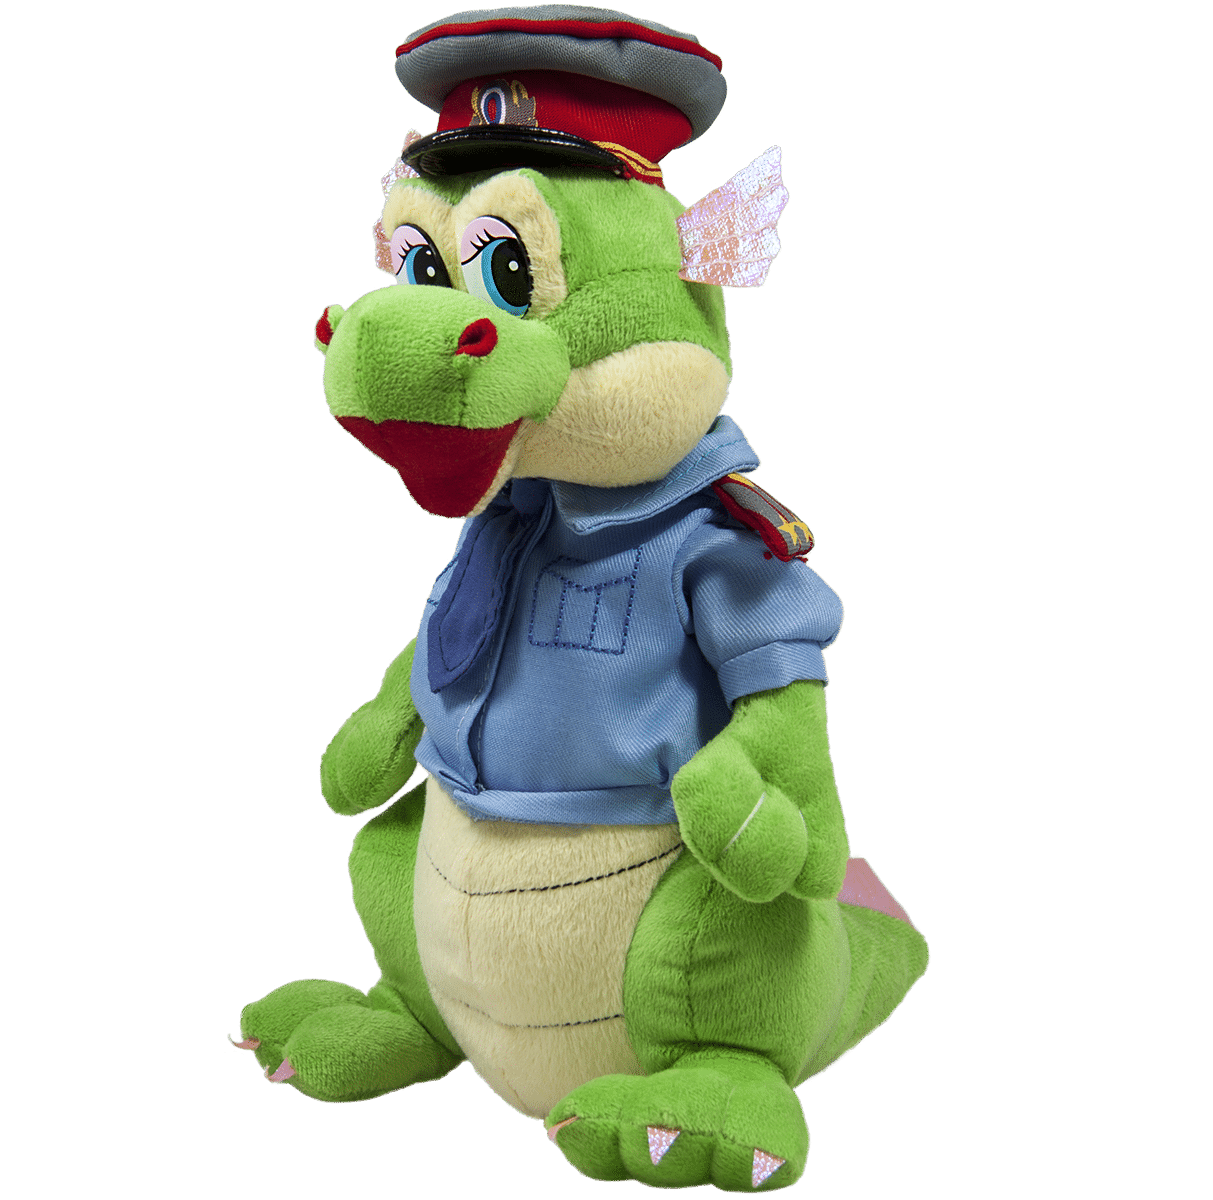 Dragon policeman - Green